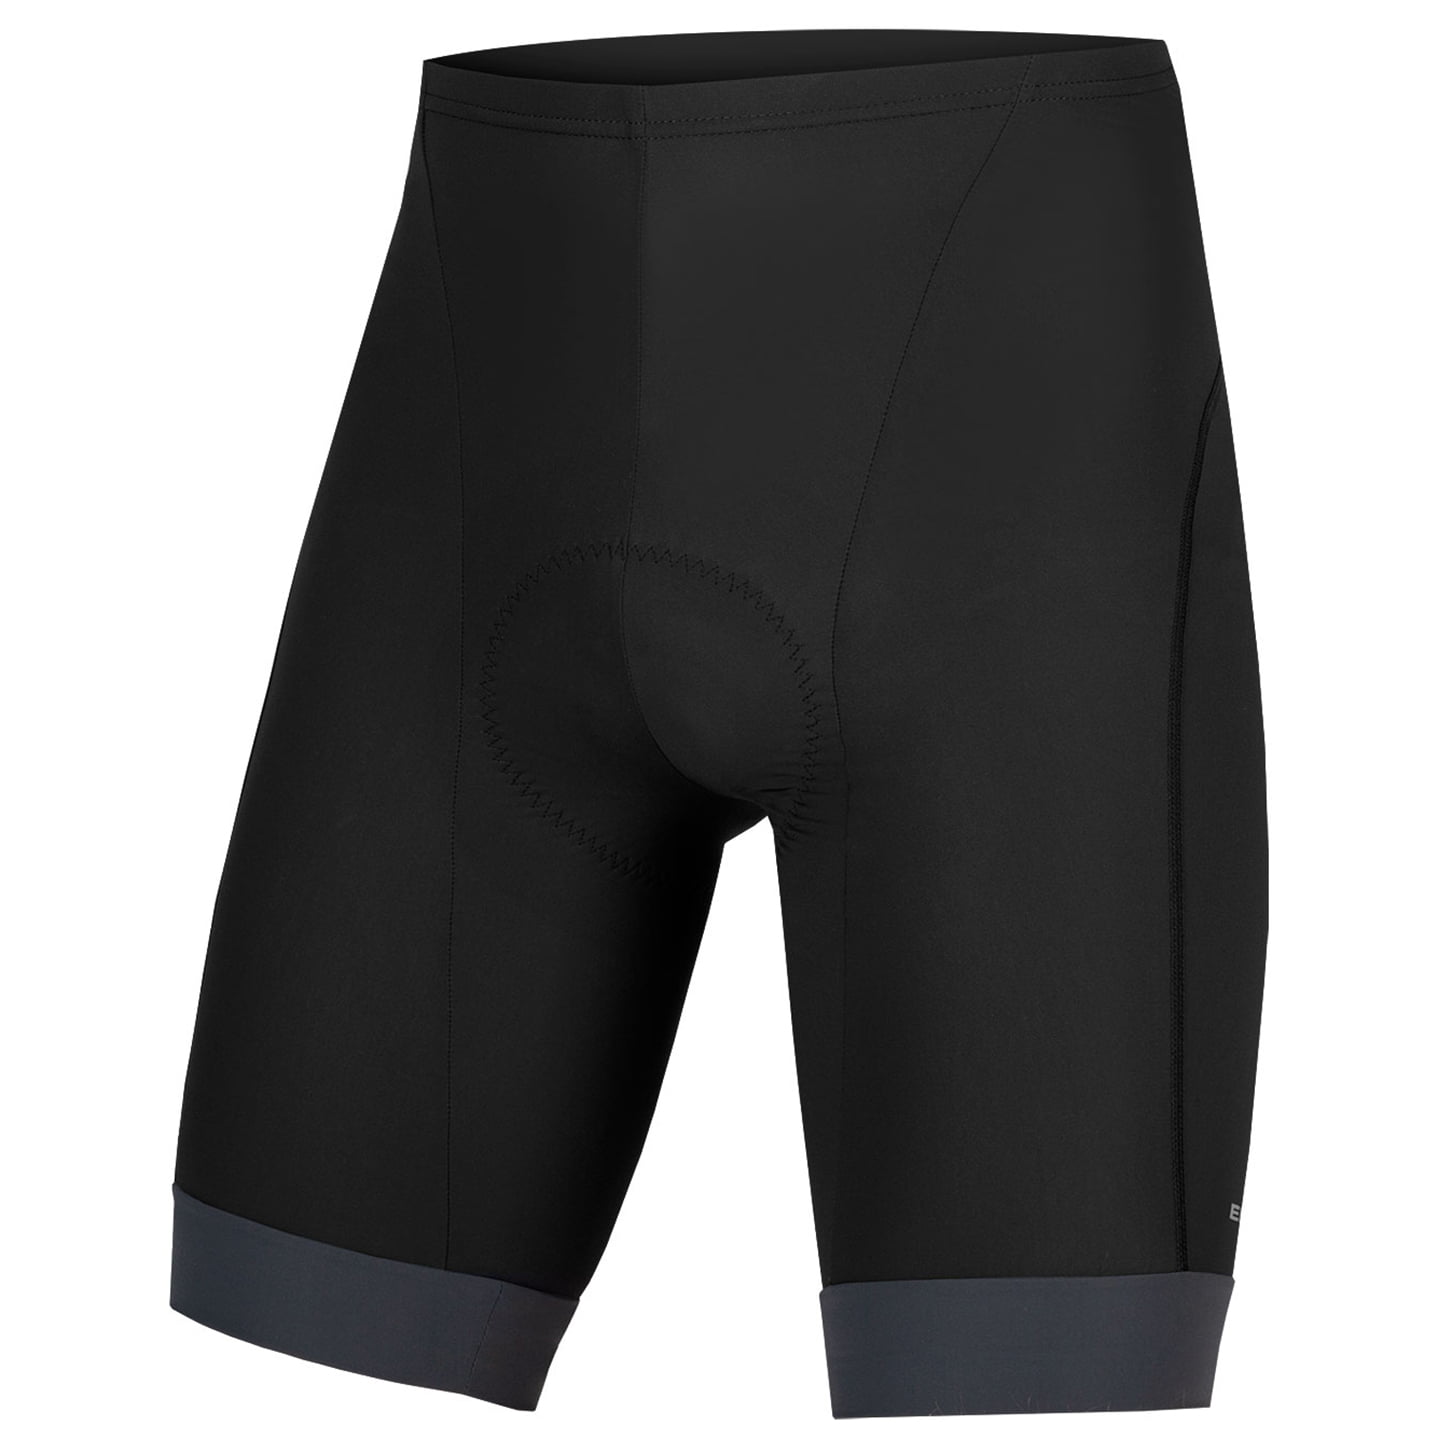 Xtract Lite Cycling Shorts Cycling Shorts, for men, size 2XL, Cycle shorts, Cycling clothing